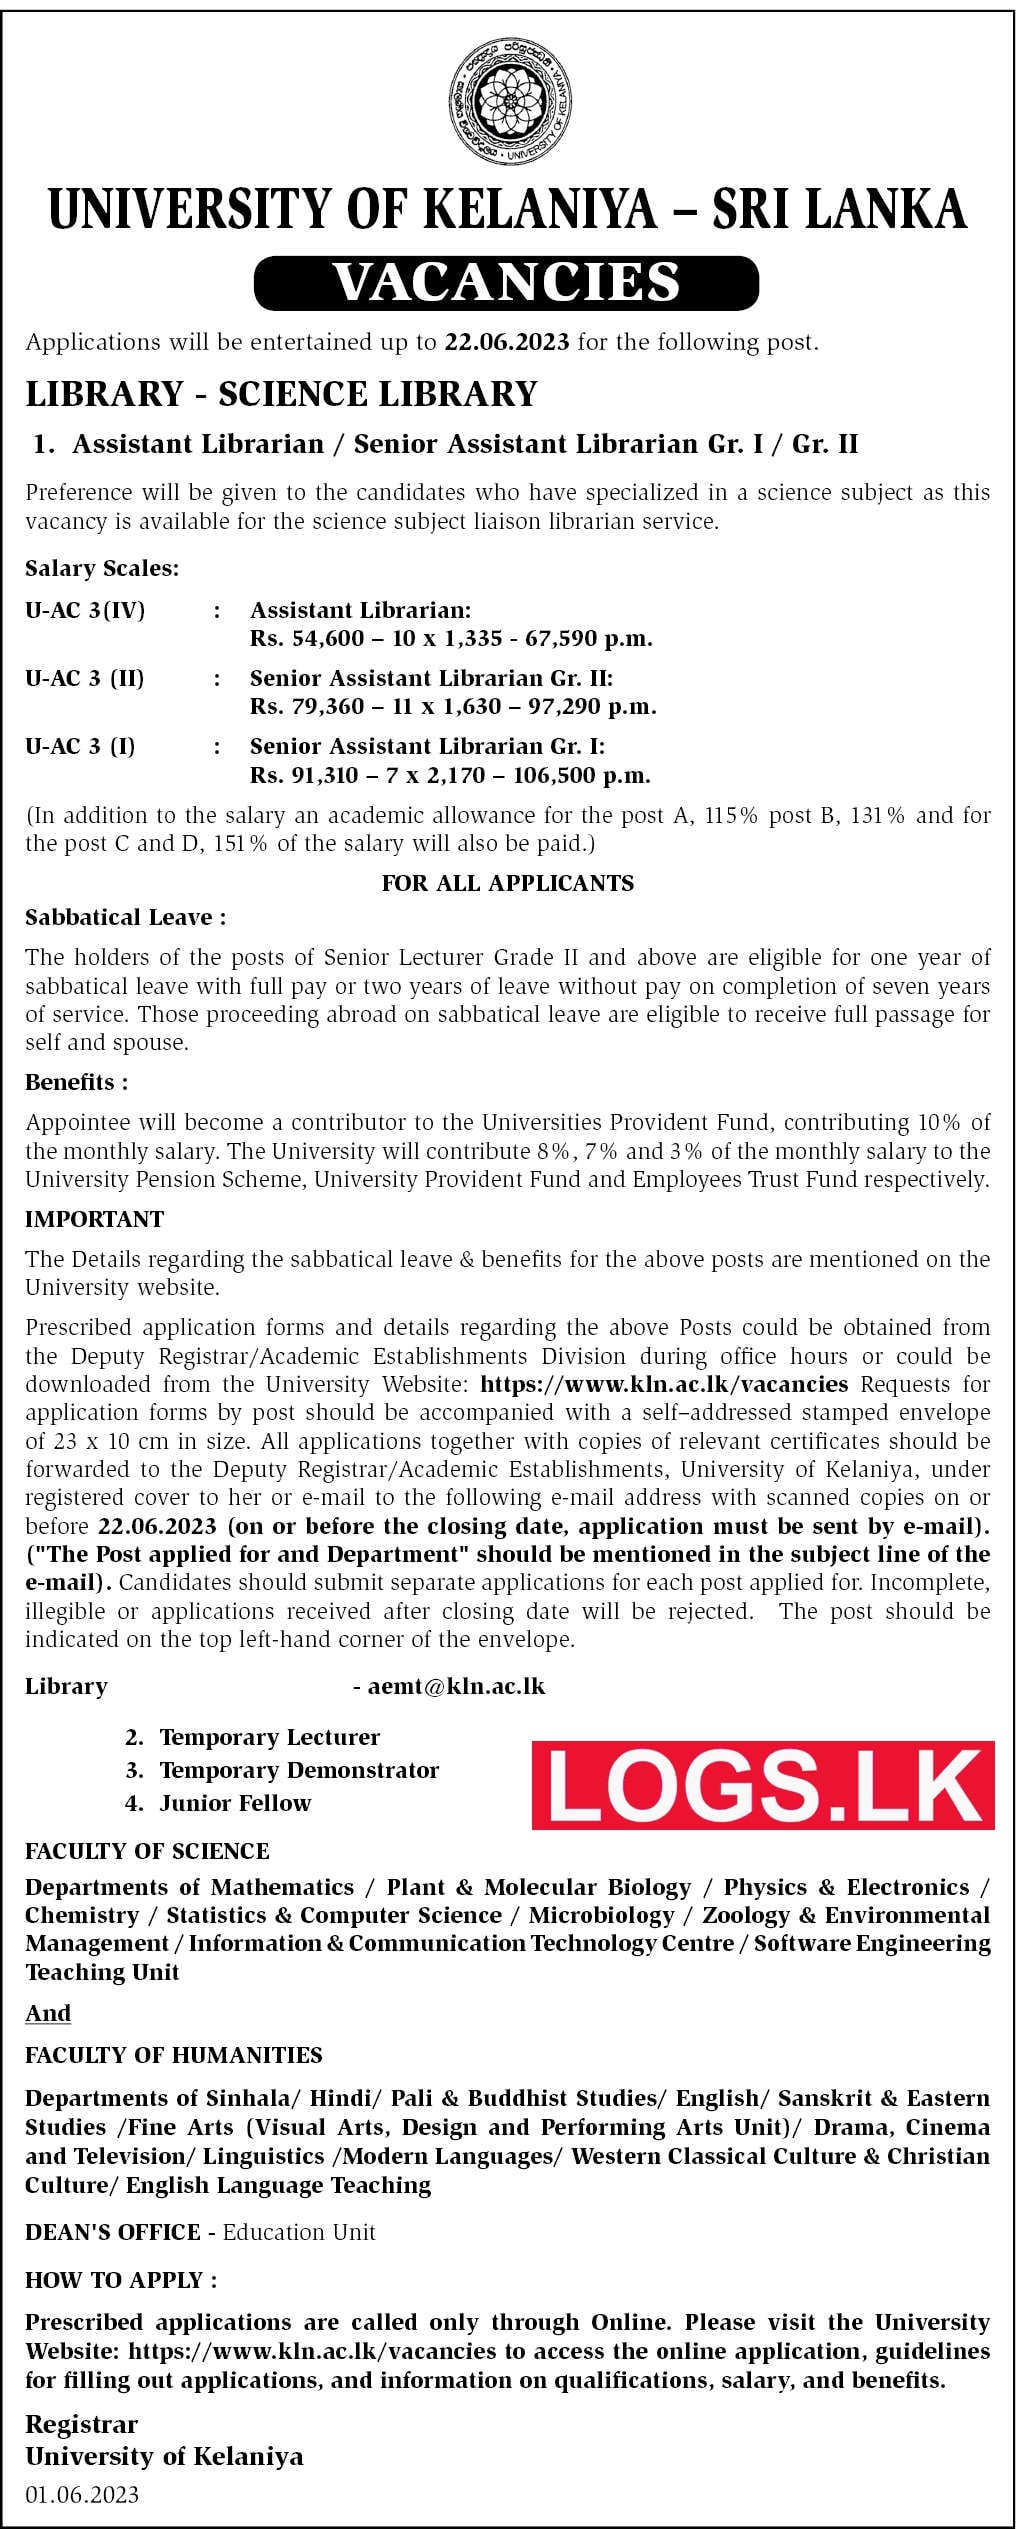 University of Kelaniya Sri Lanka Vacancies 2023 Application, Details Download